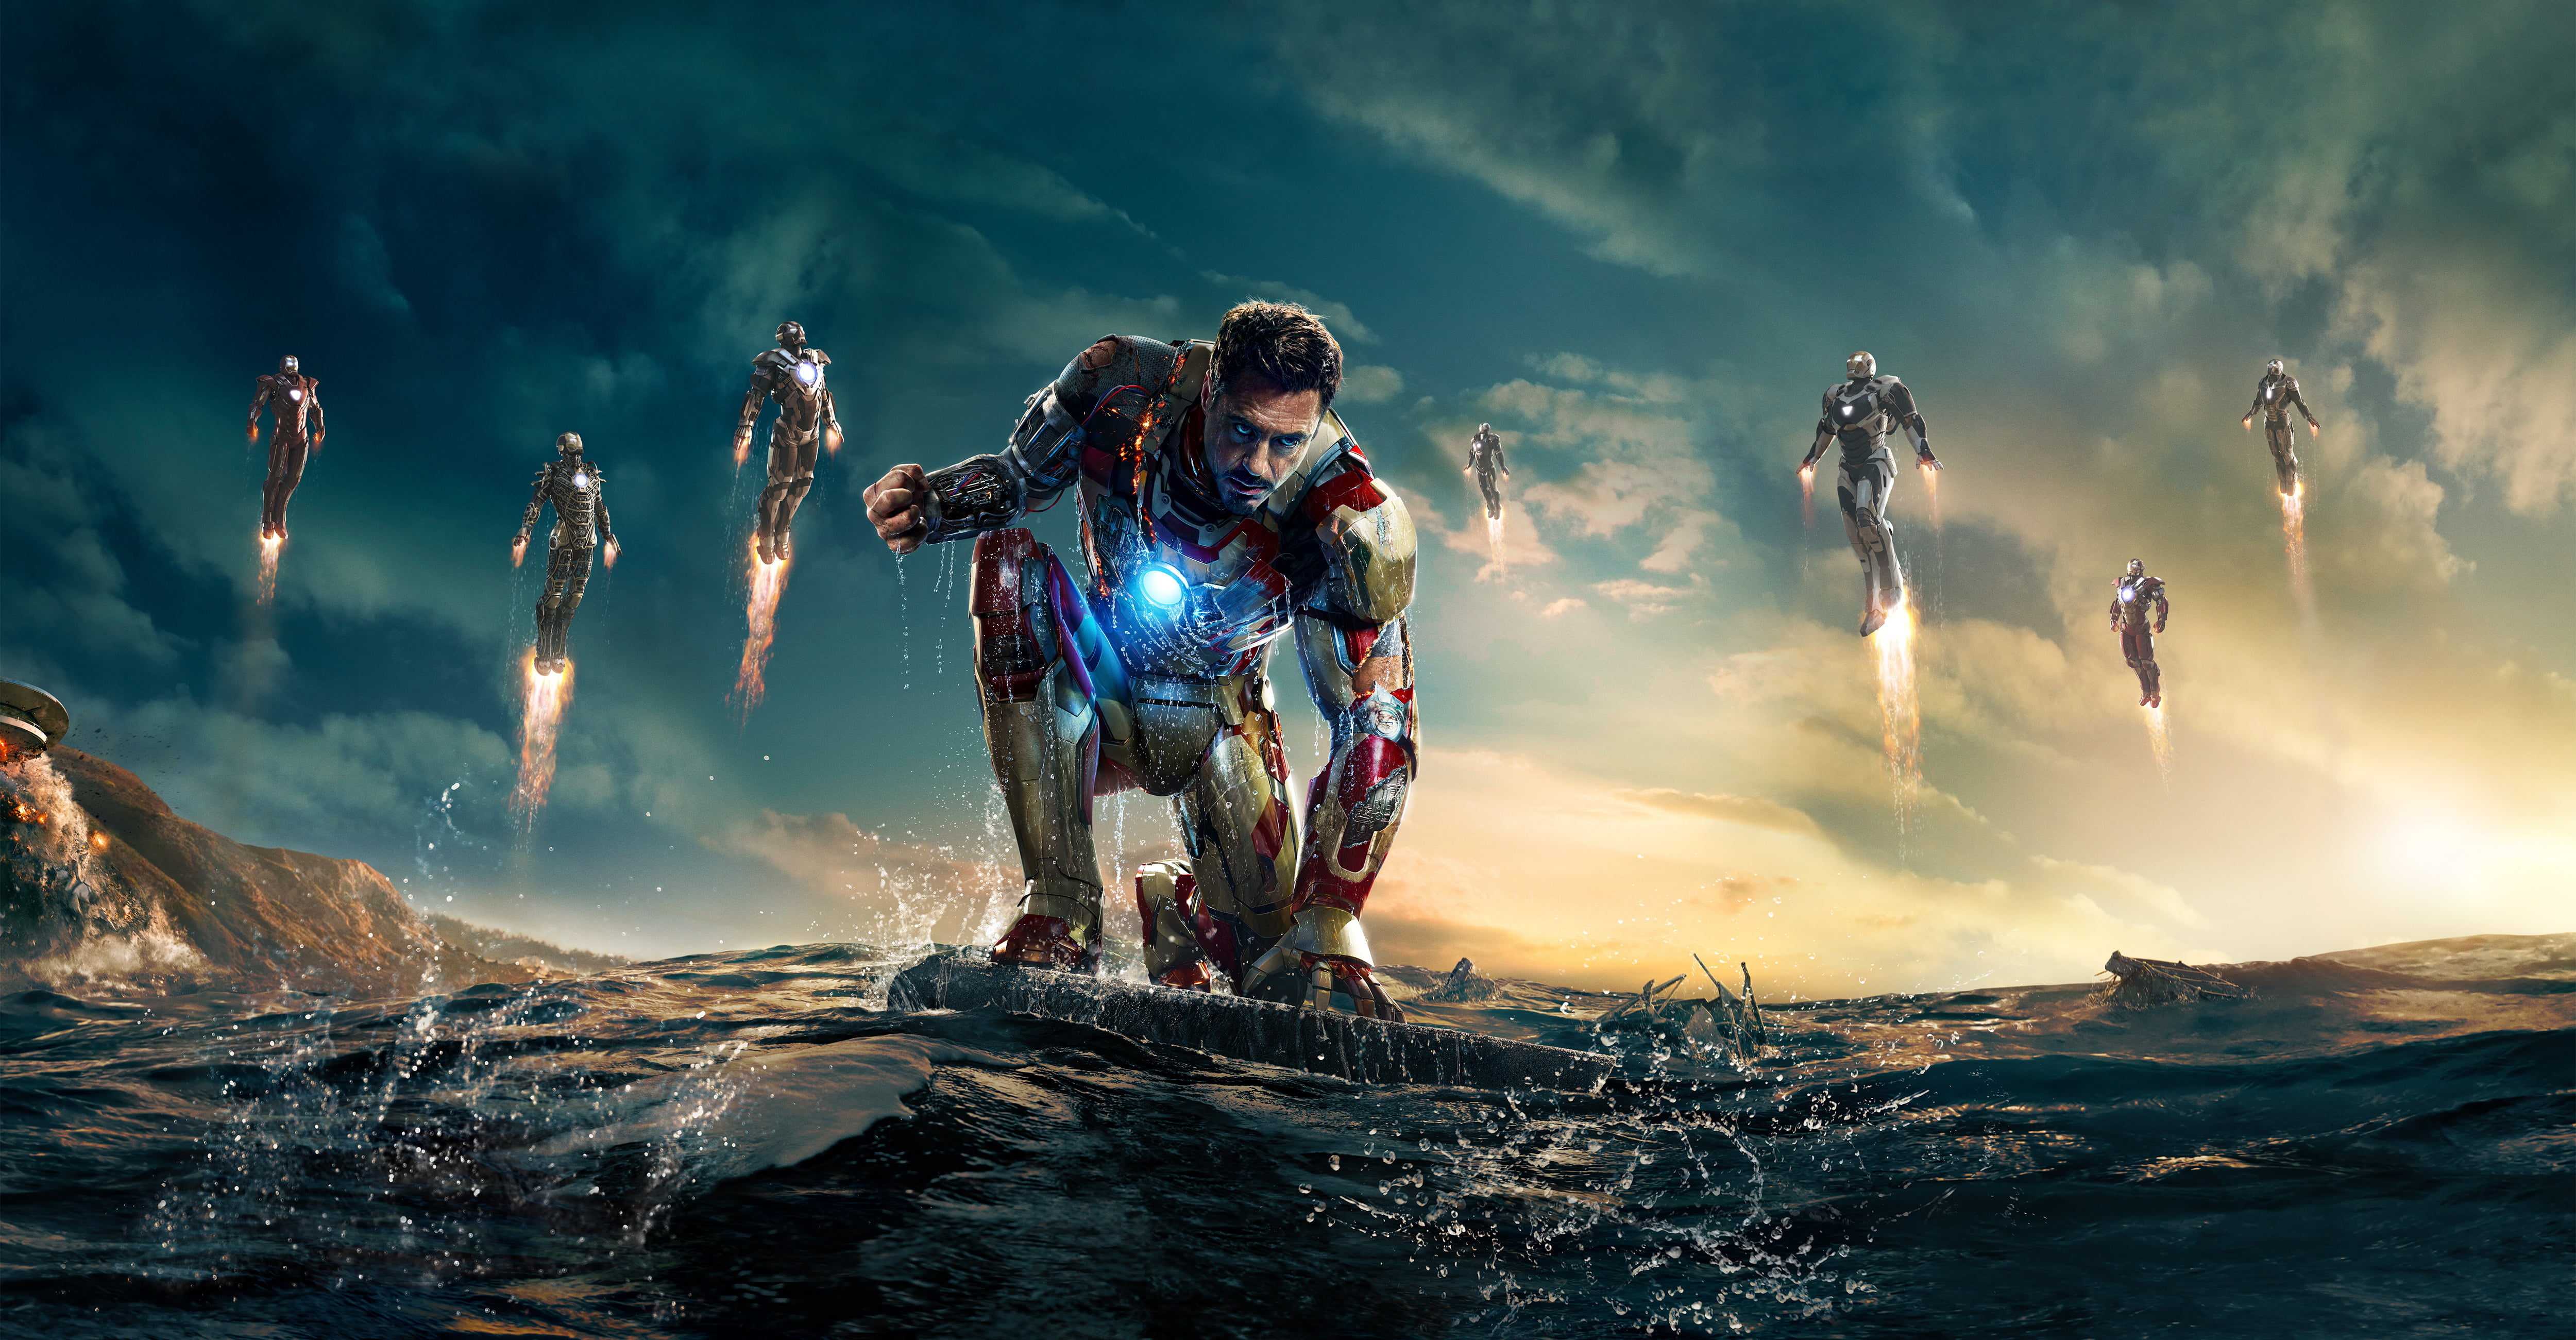 Iron-Man 3 poster, Robert, Iron Man, Tony Stark, iron man 3, Robert Downey